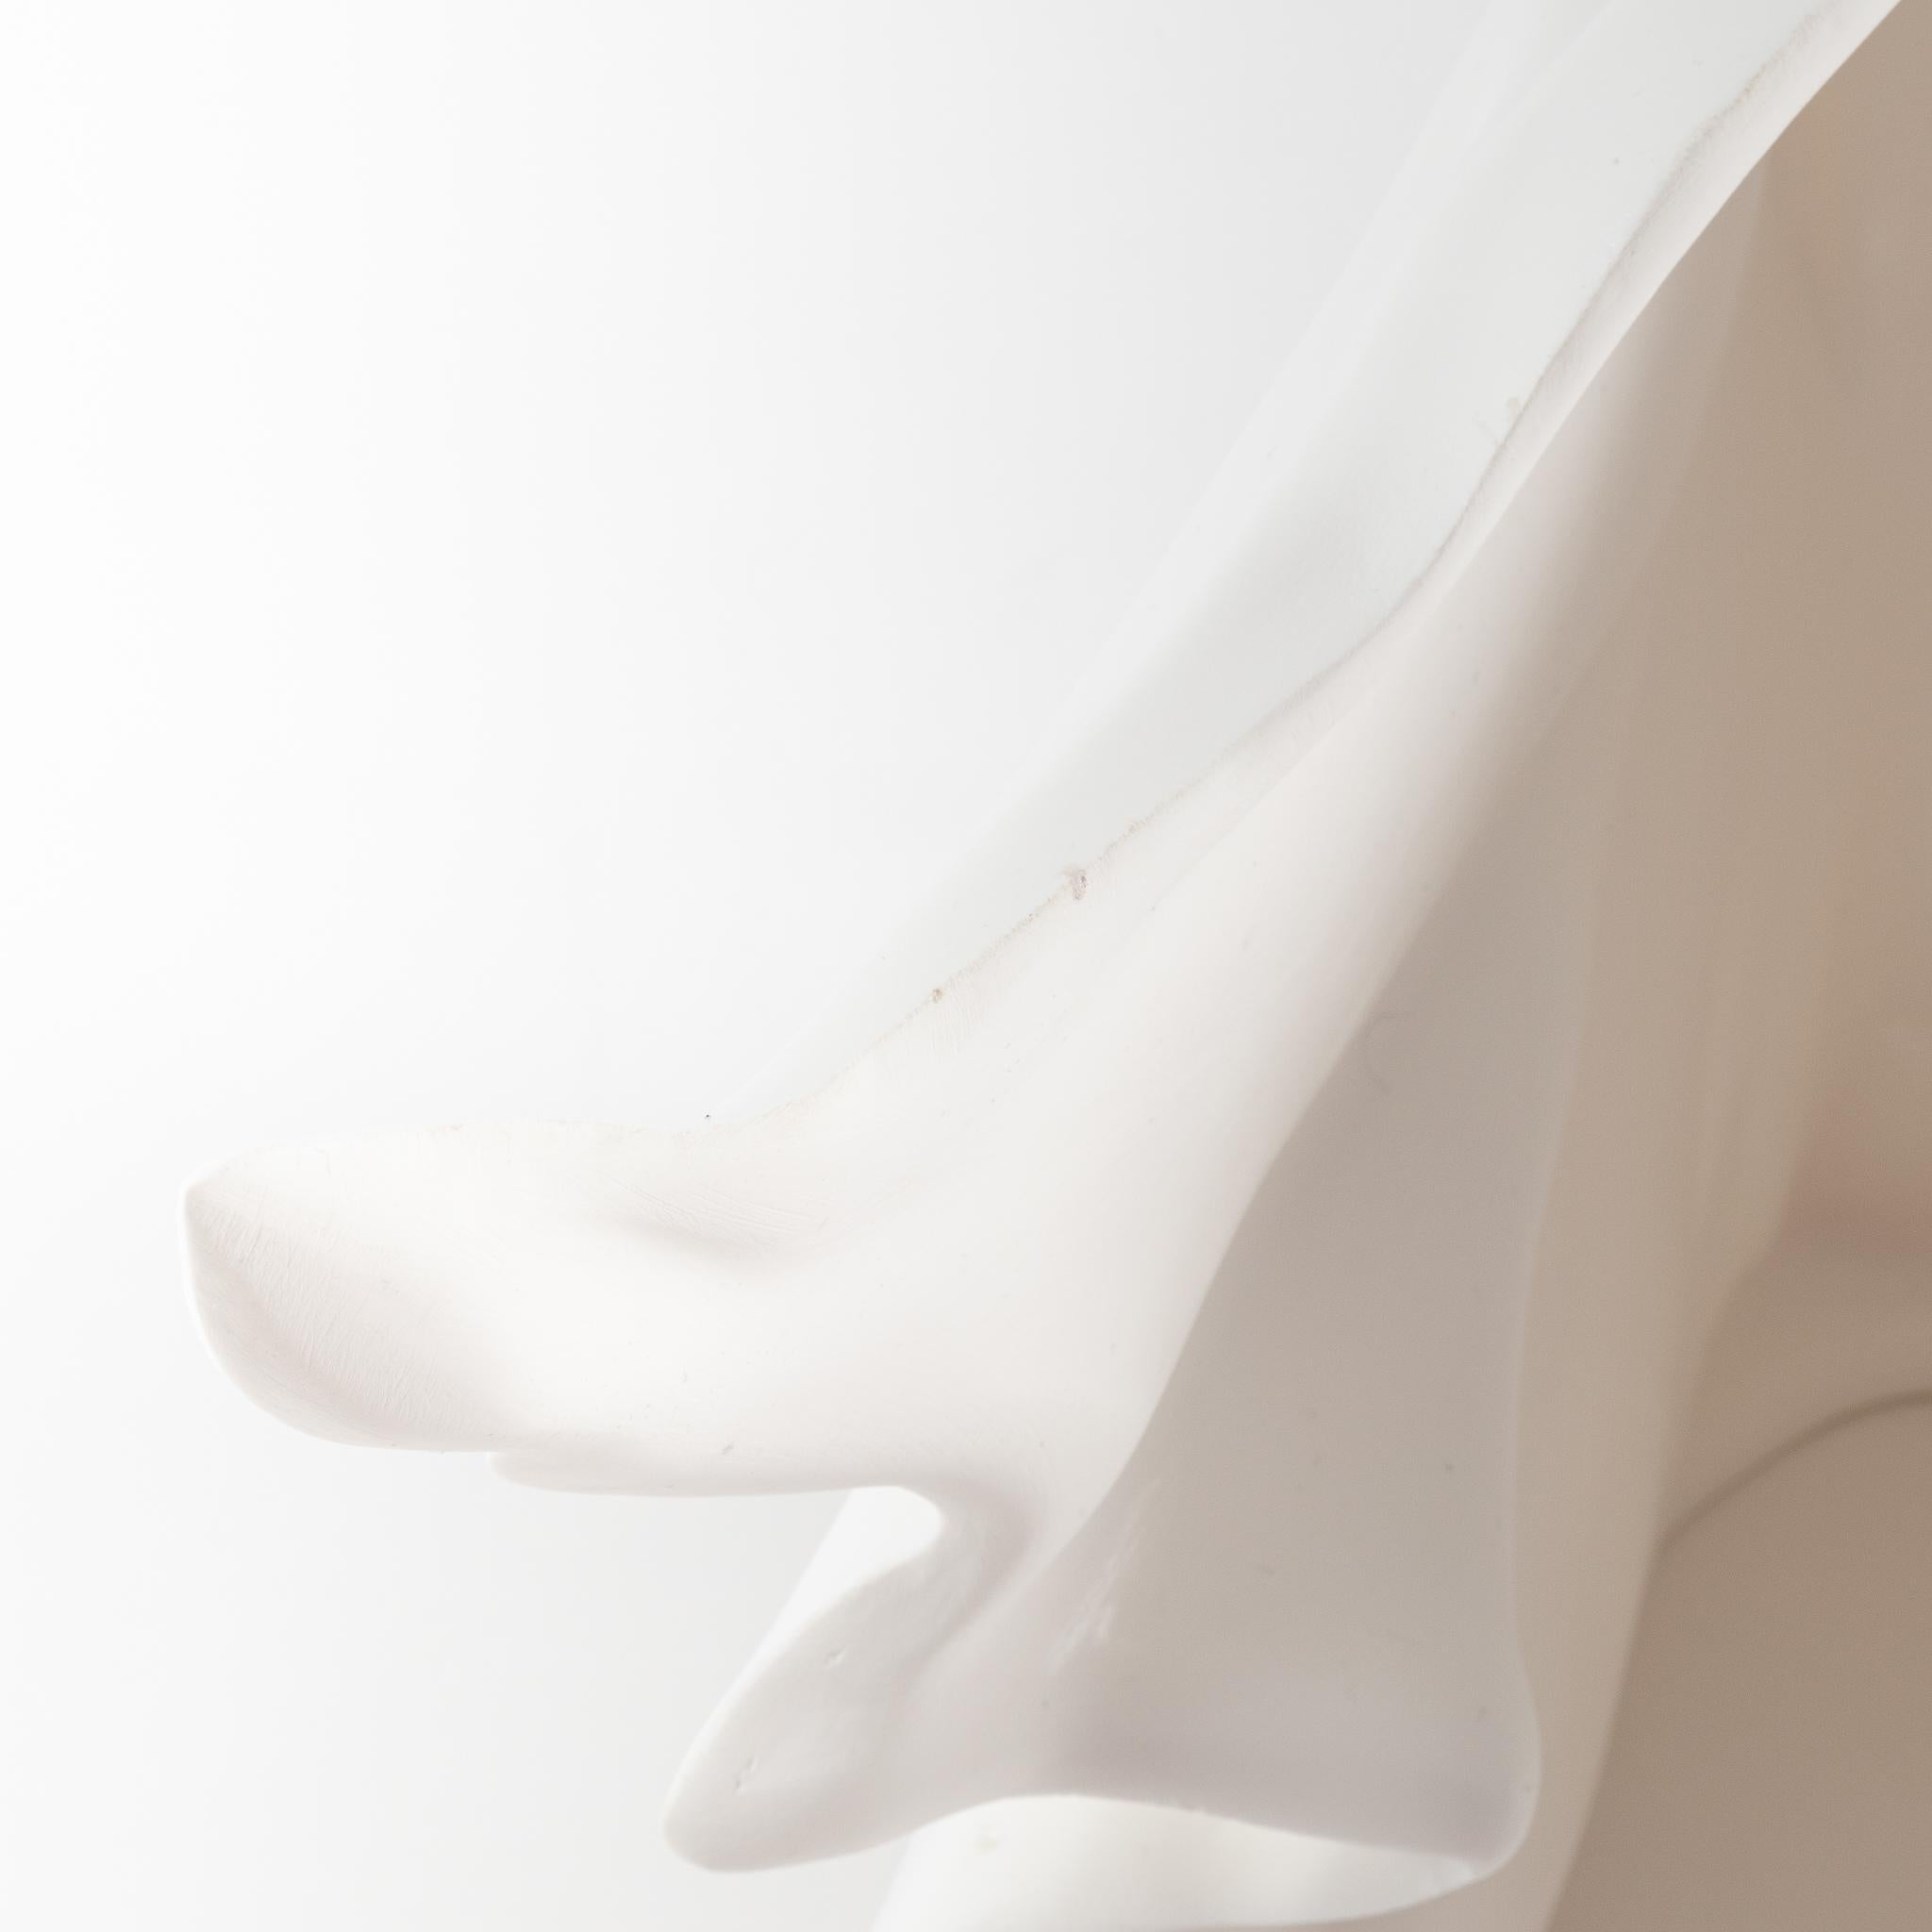  Hollow Figure Daniel Arsham White Ceramic Sculpture Modern Contemporary Design For Sale 1